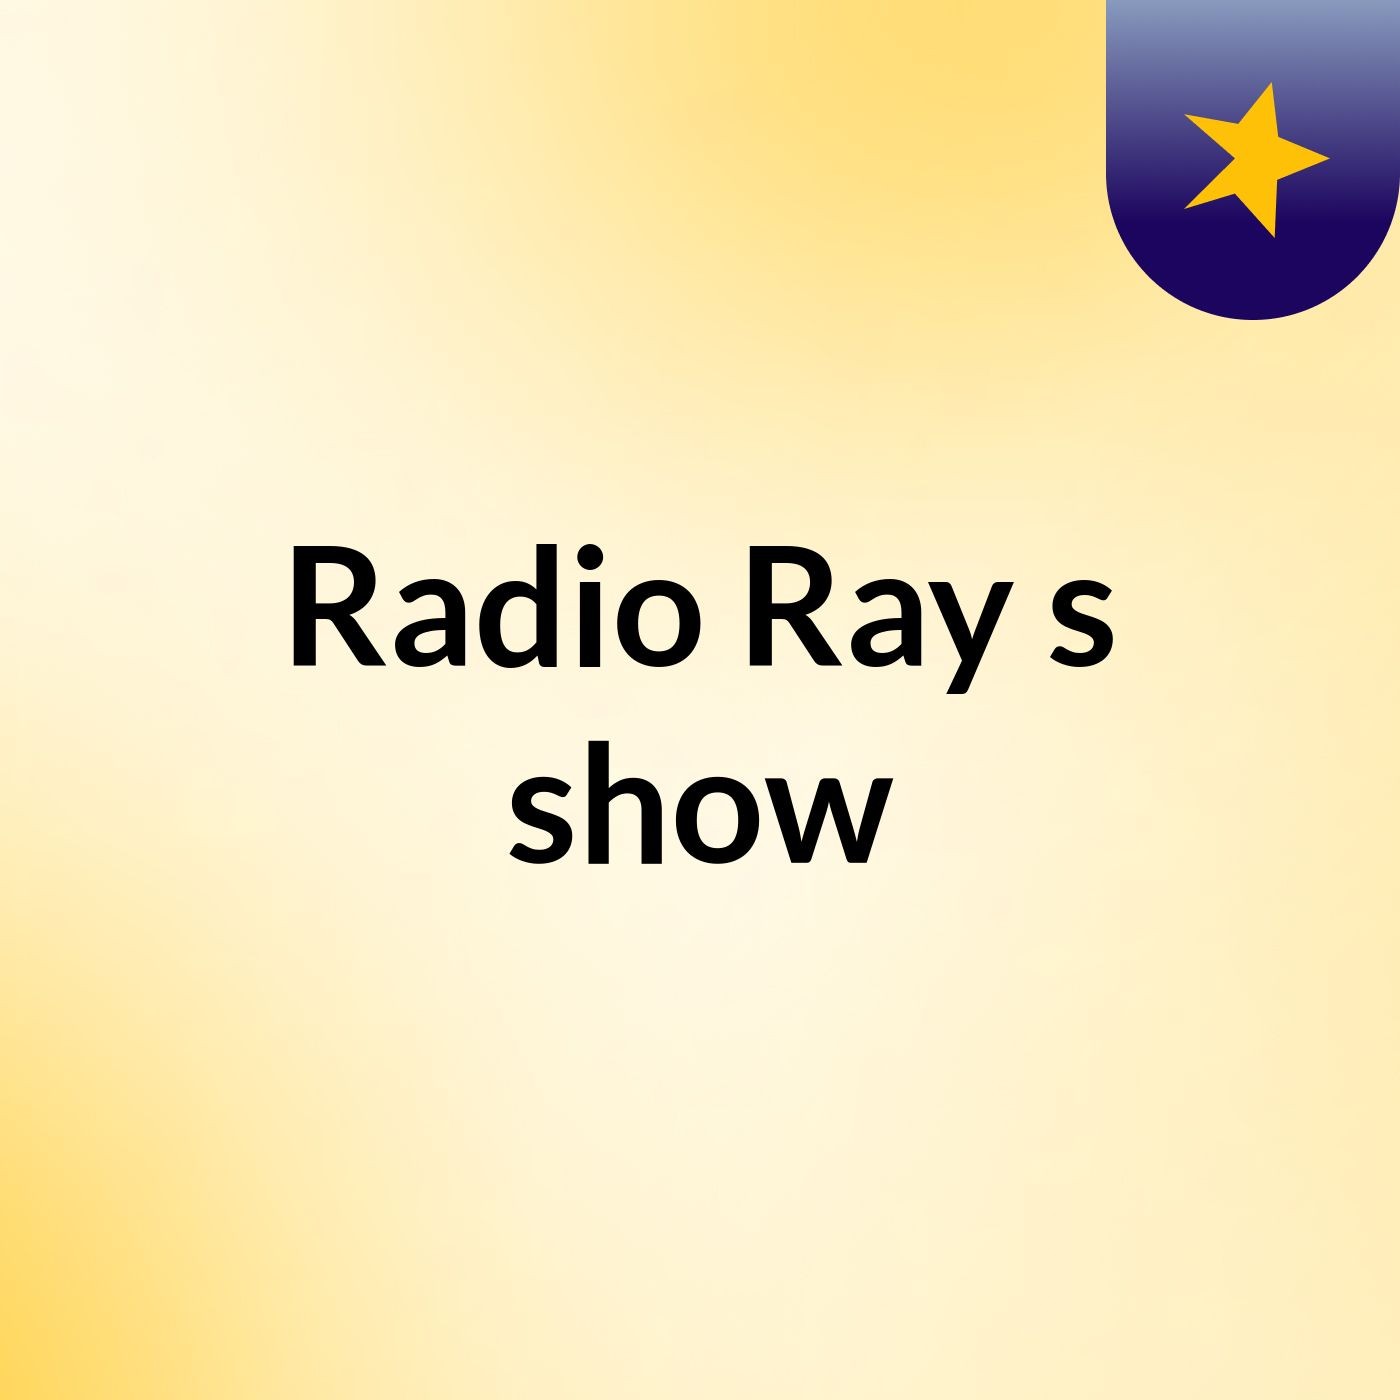 Radio Ray's show